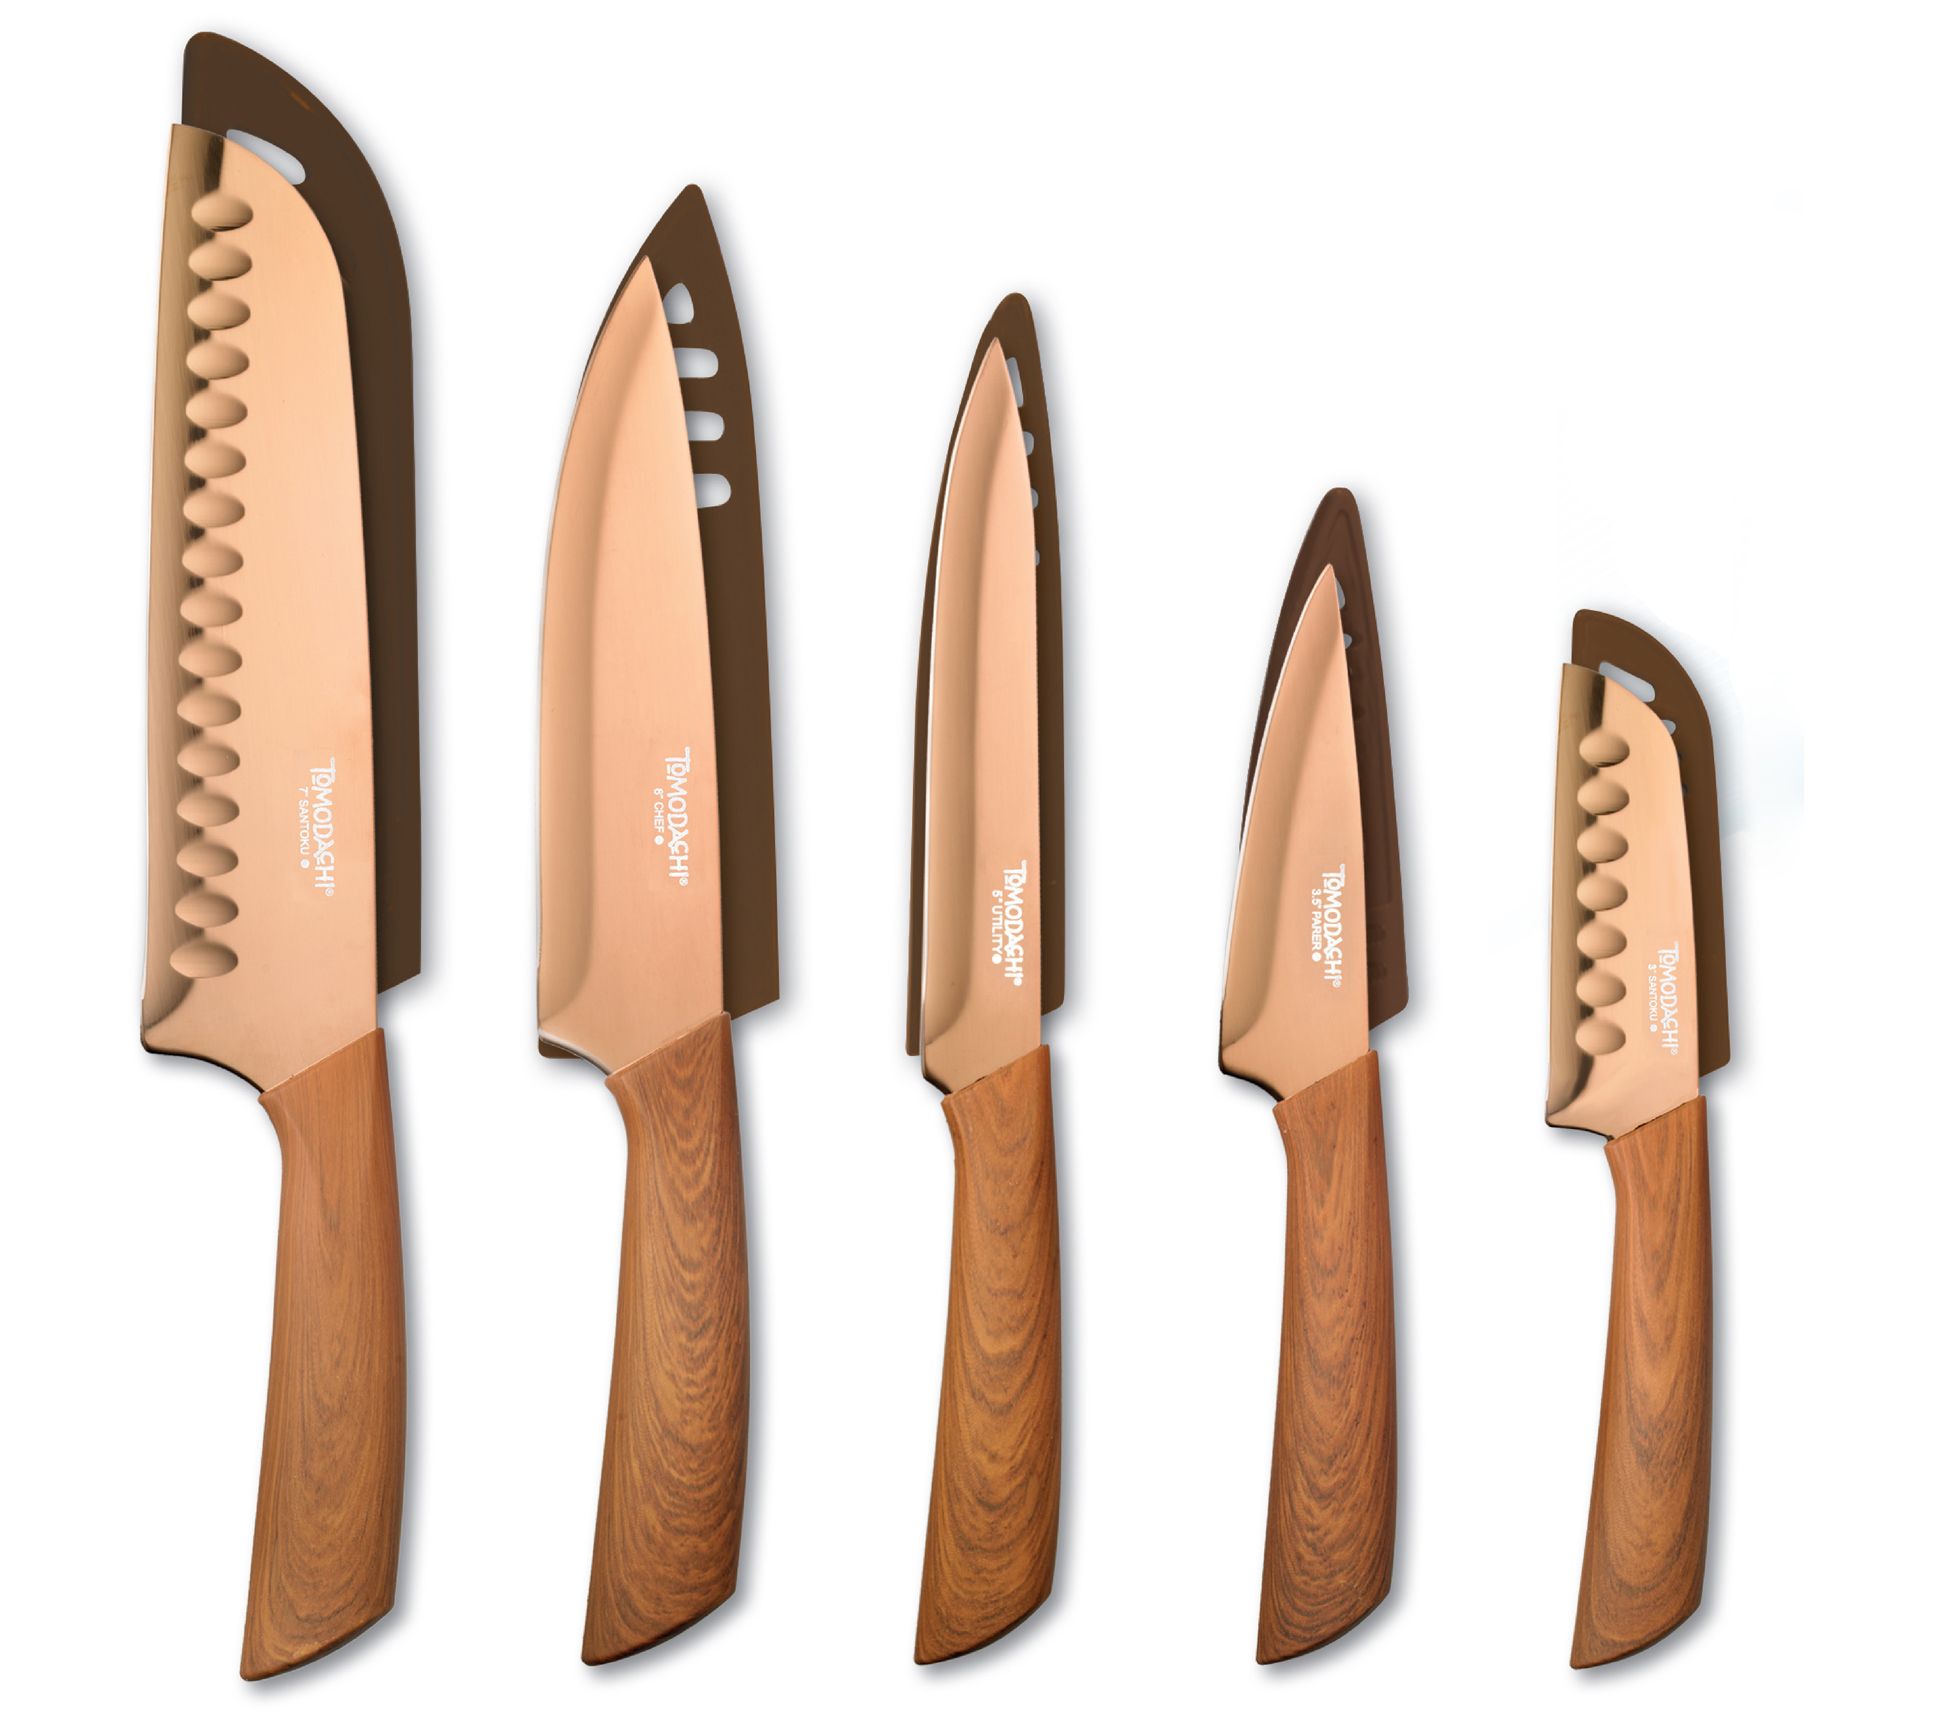 Hampton Forge Tomodachi Rainbow Titanium 10 Piece Cutlery Set with Blade Guards